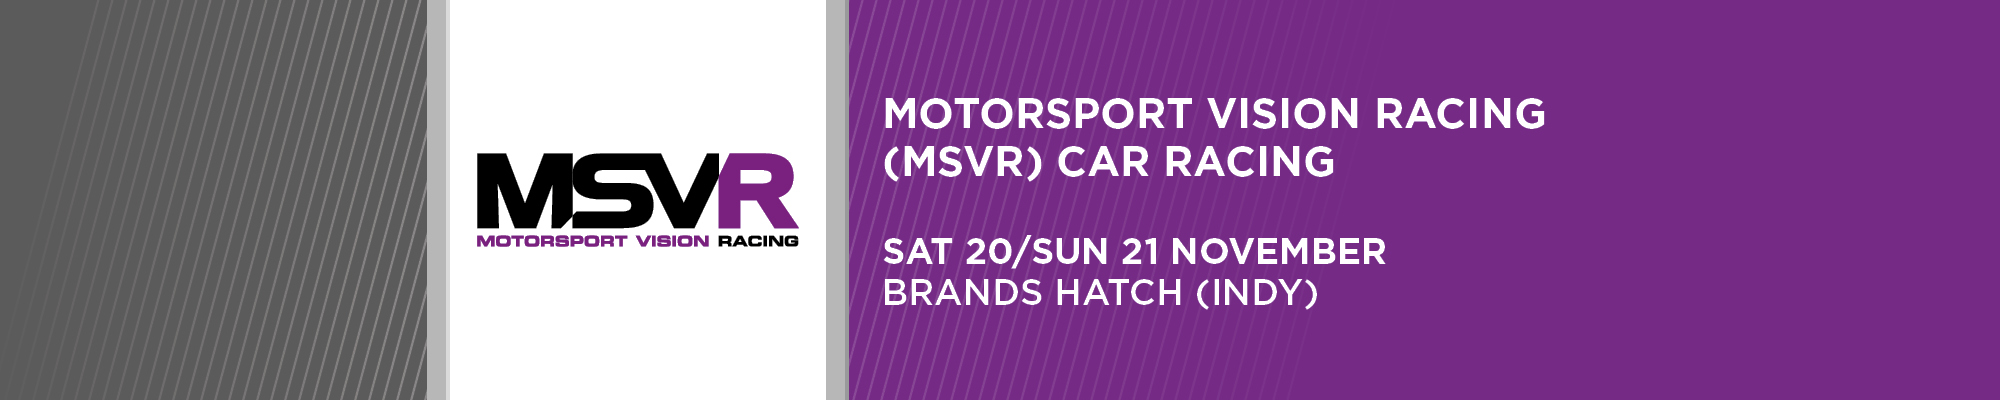 MSVR Club Car Championships